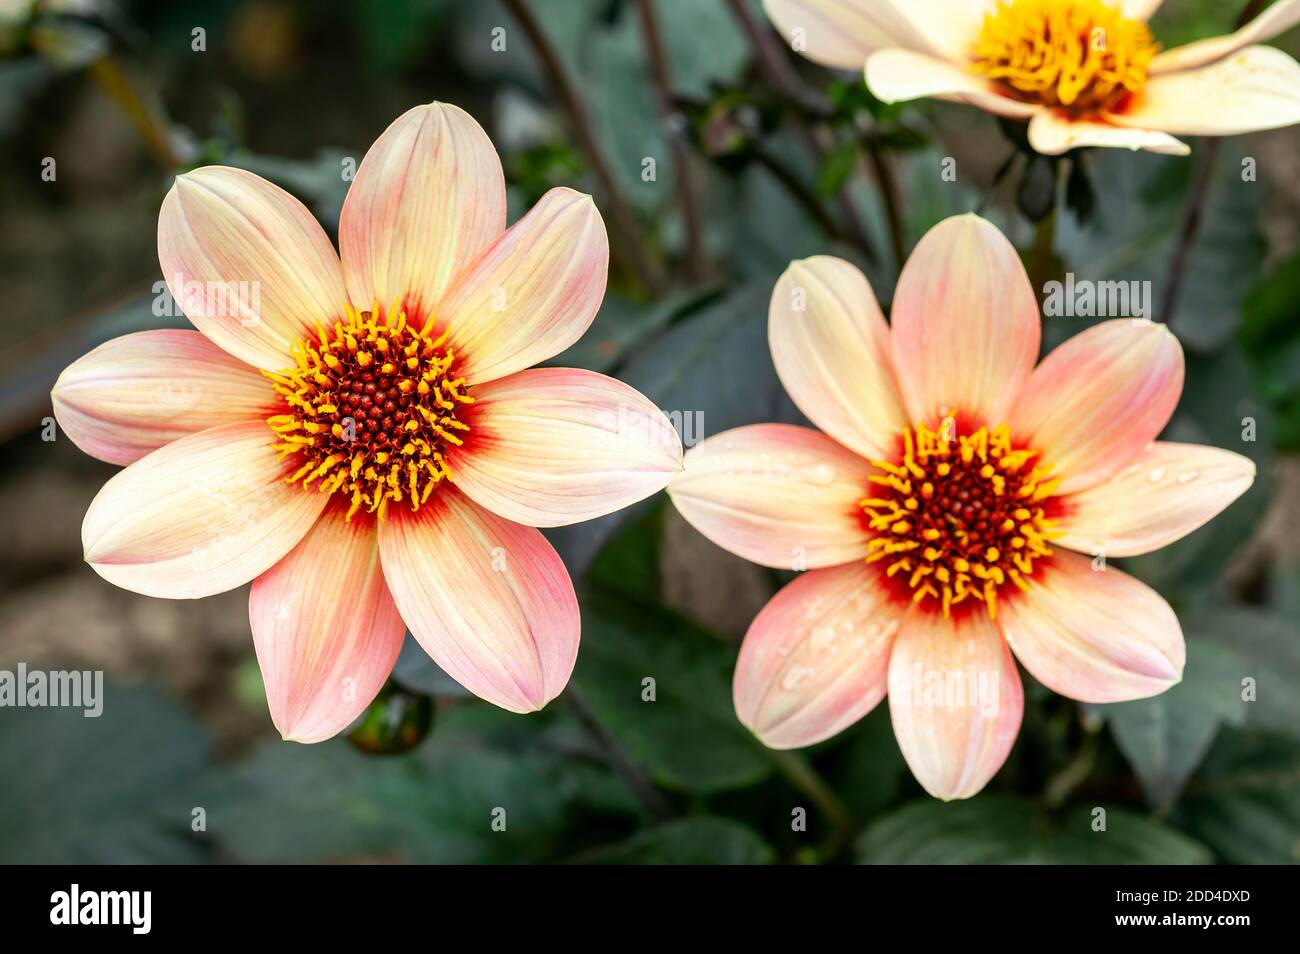 Dahlia 'Happy Single First Love' a orange pink summer autumn flower tuber plant, stock photo image Stock Photo